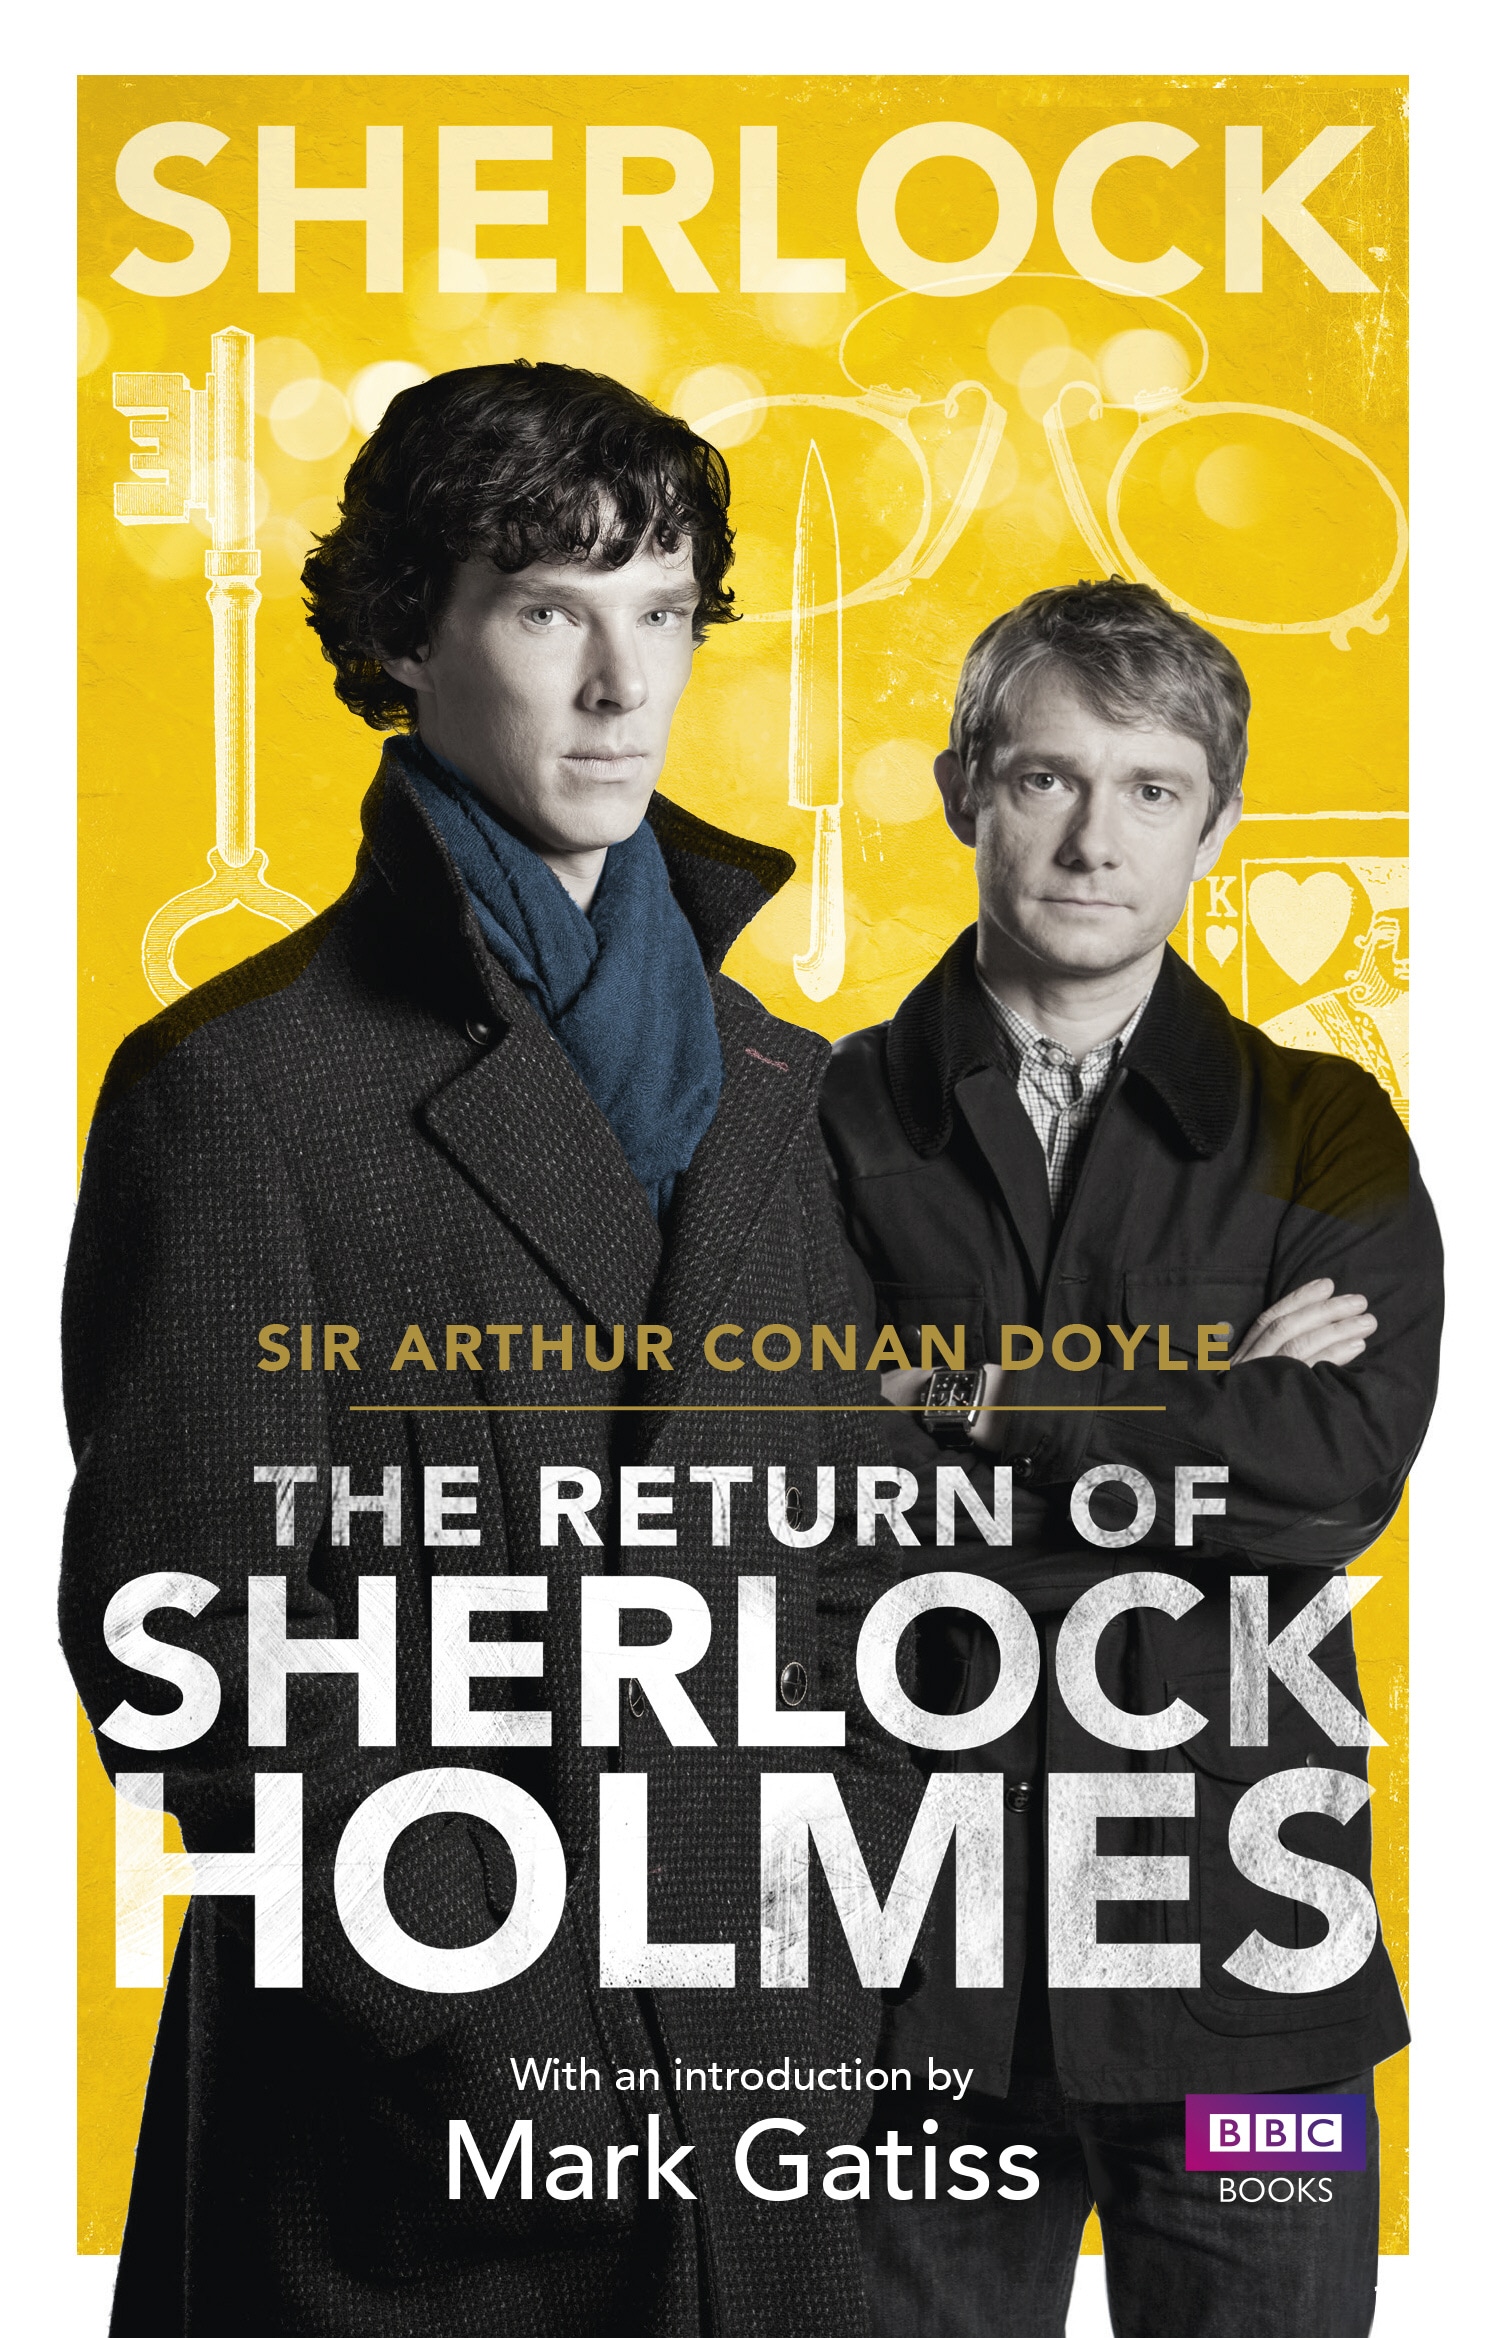 Book “Sherlock: The Return of Sherlock Holmes” by Arthur Conan Doyle — December 5, 2013